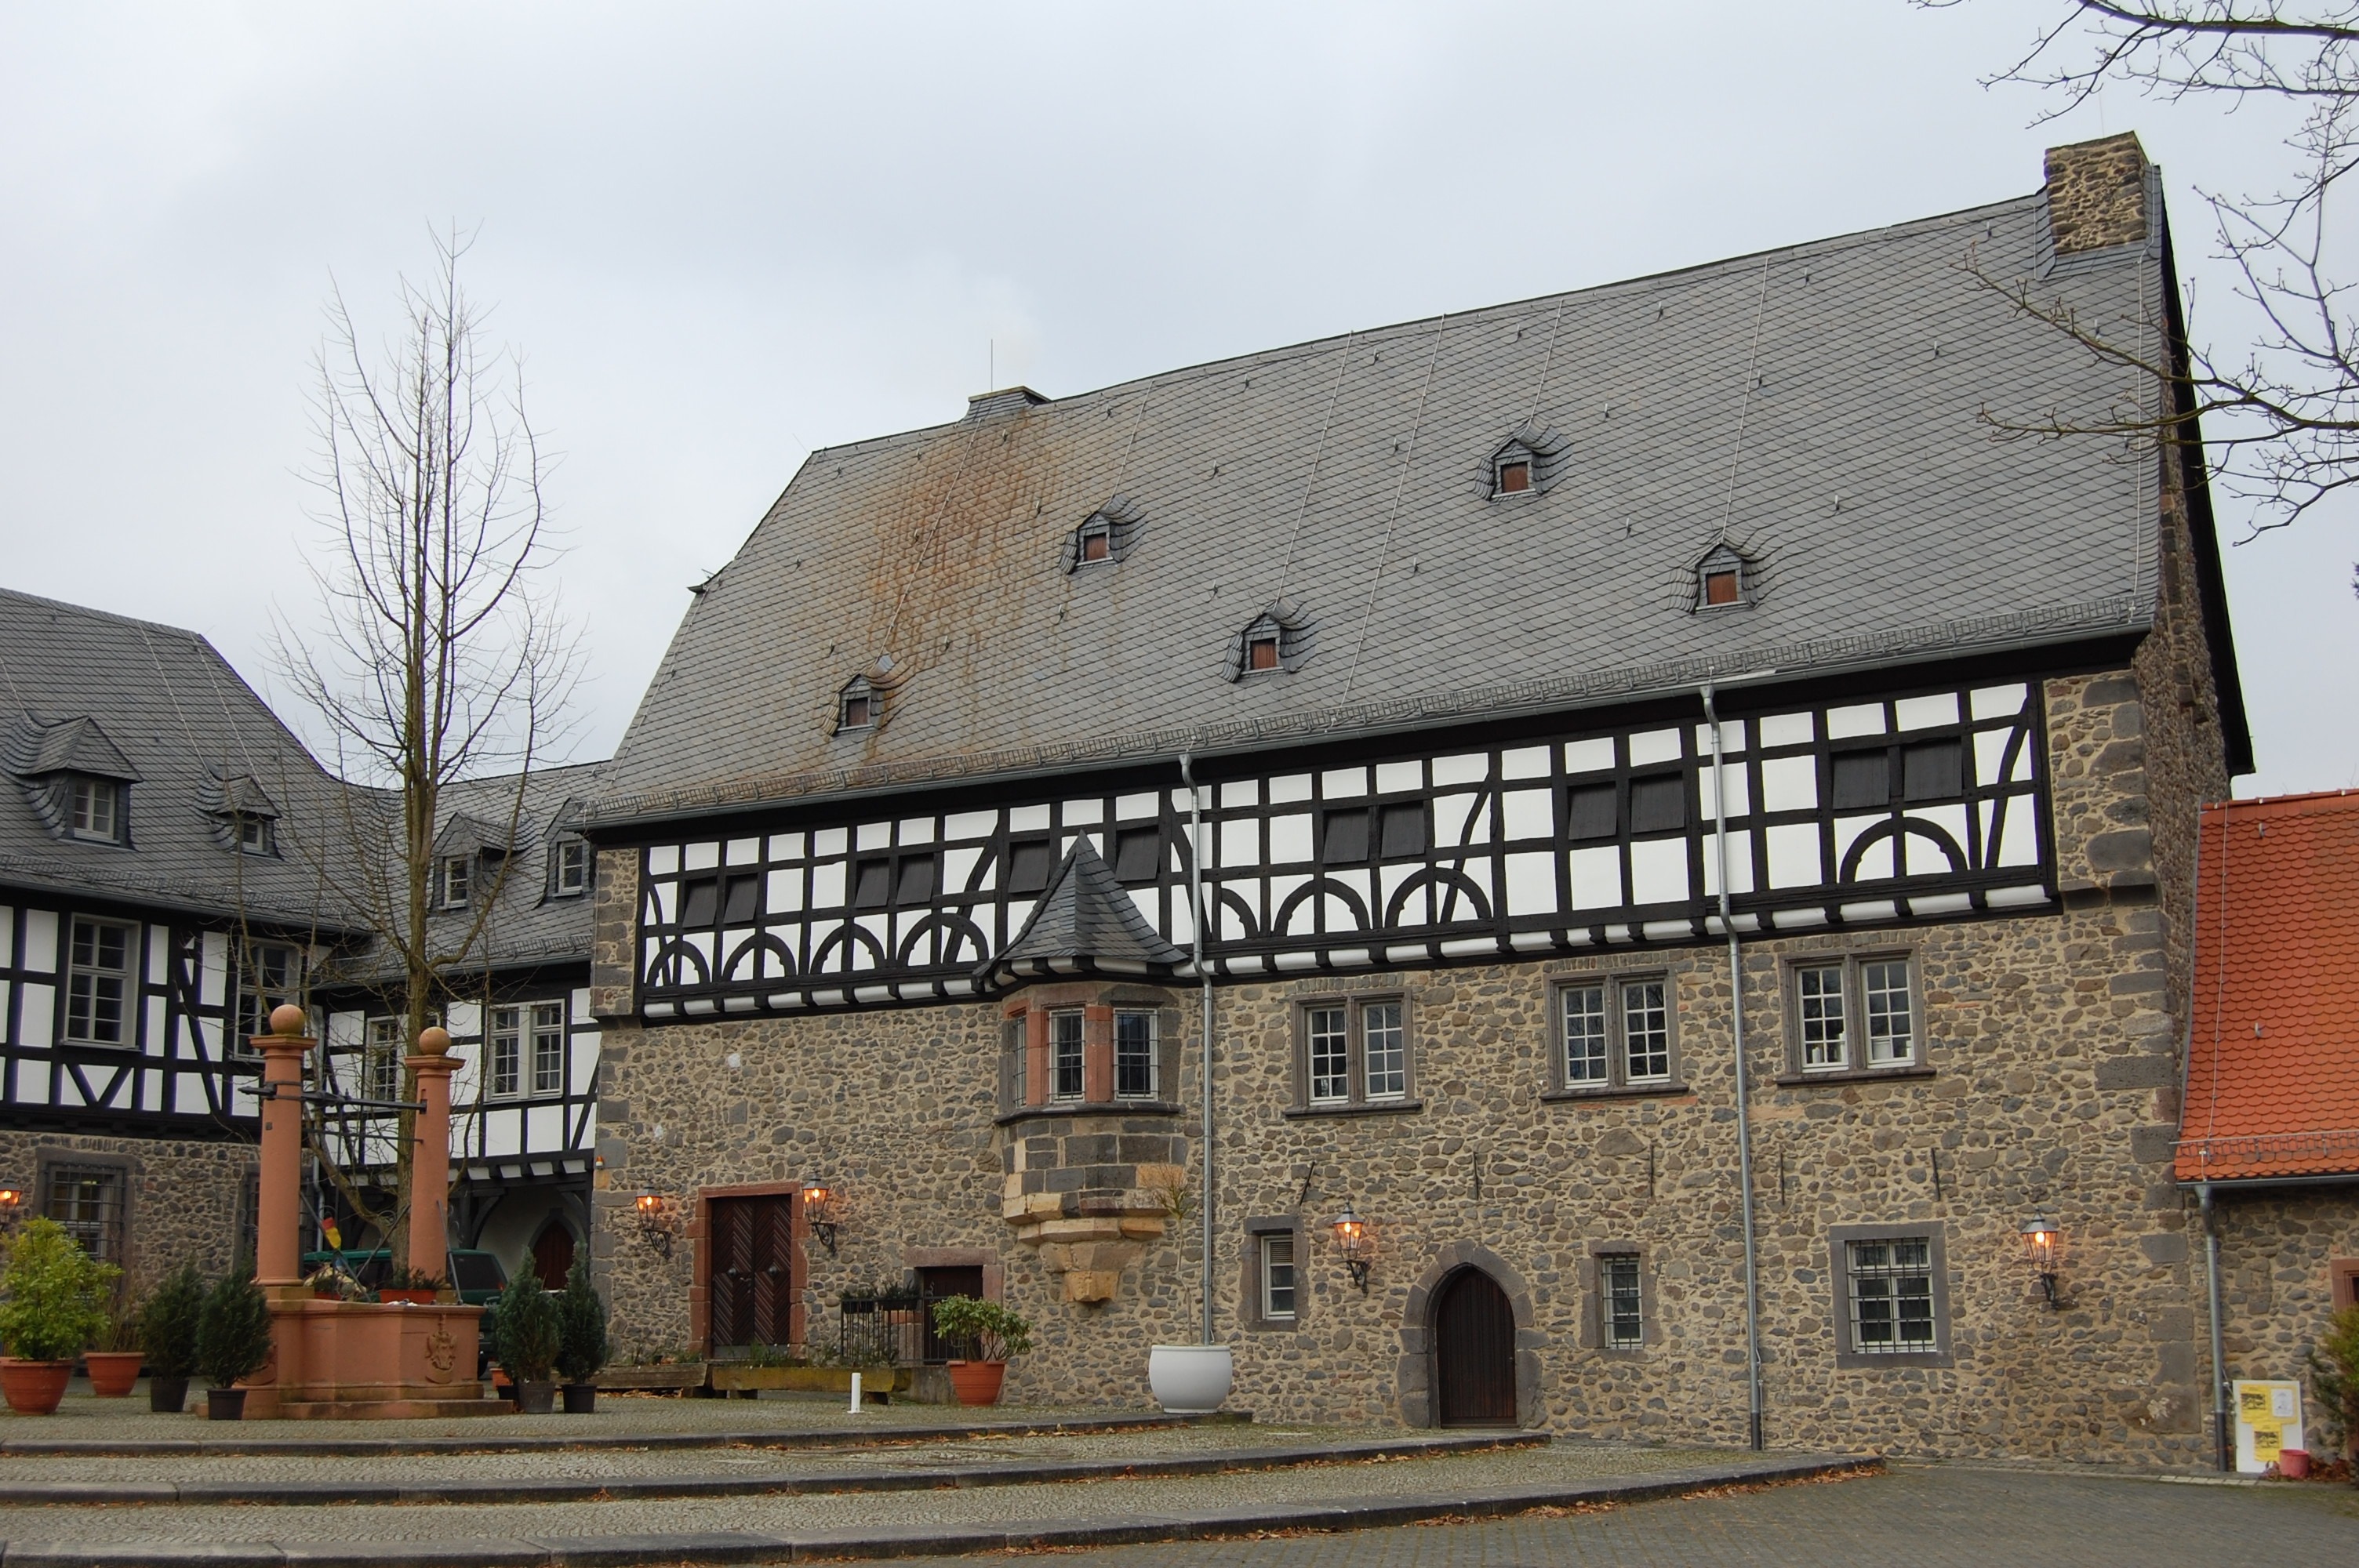 Masonry, Courtyard, Monastery, Hof, Wall, building exterior, architecture